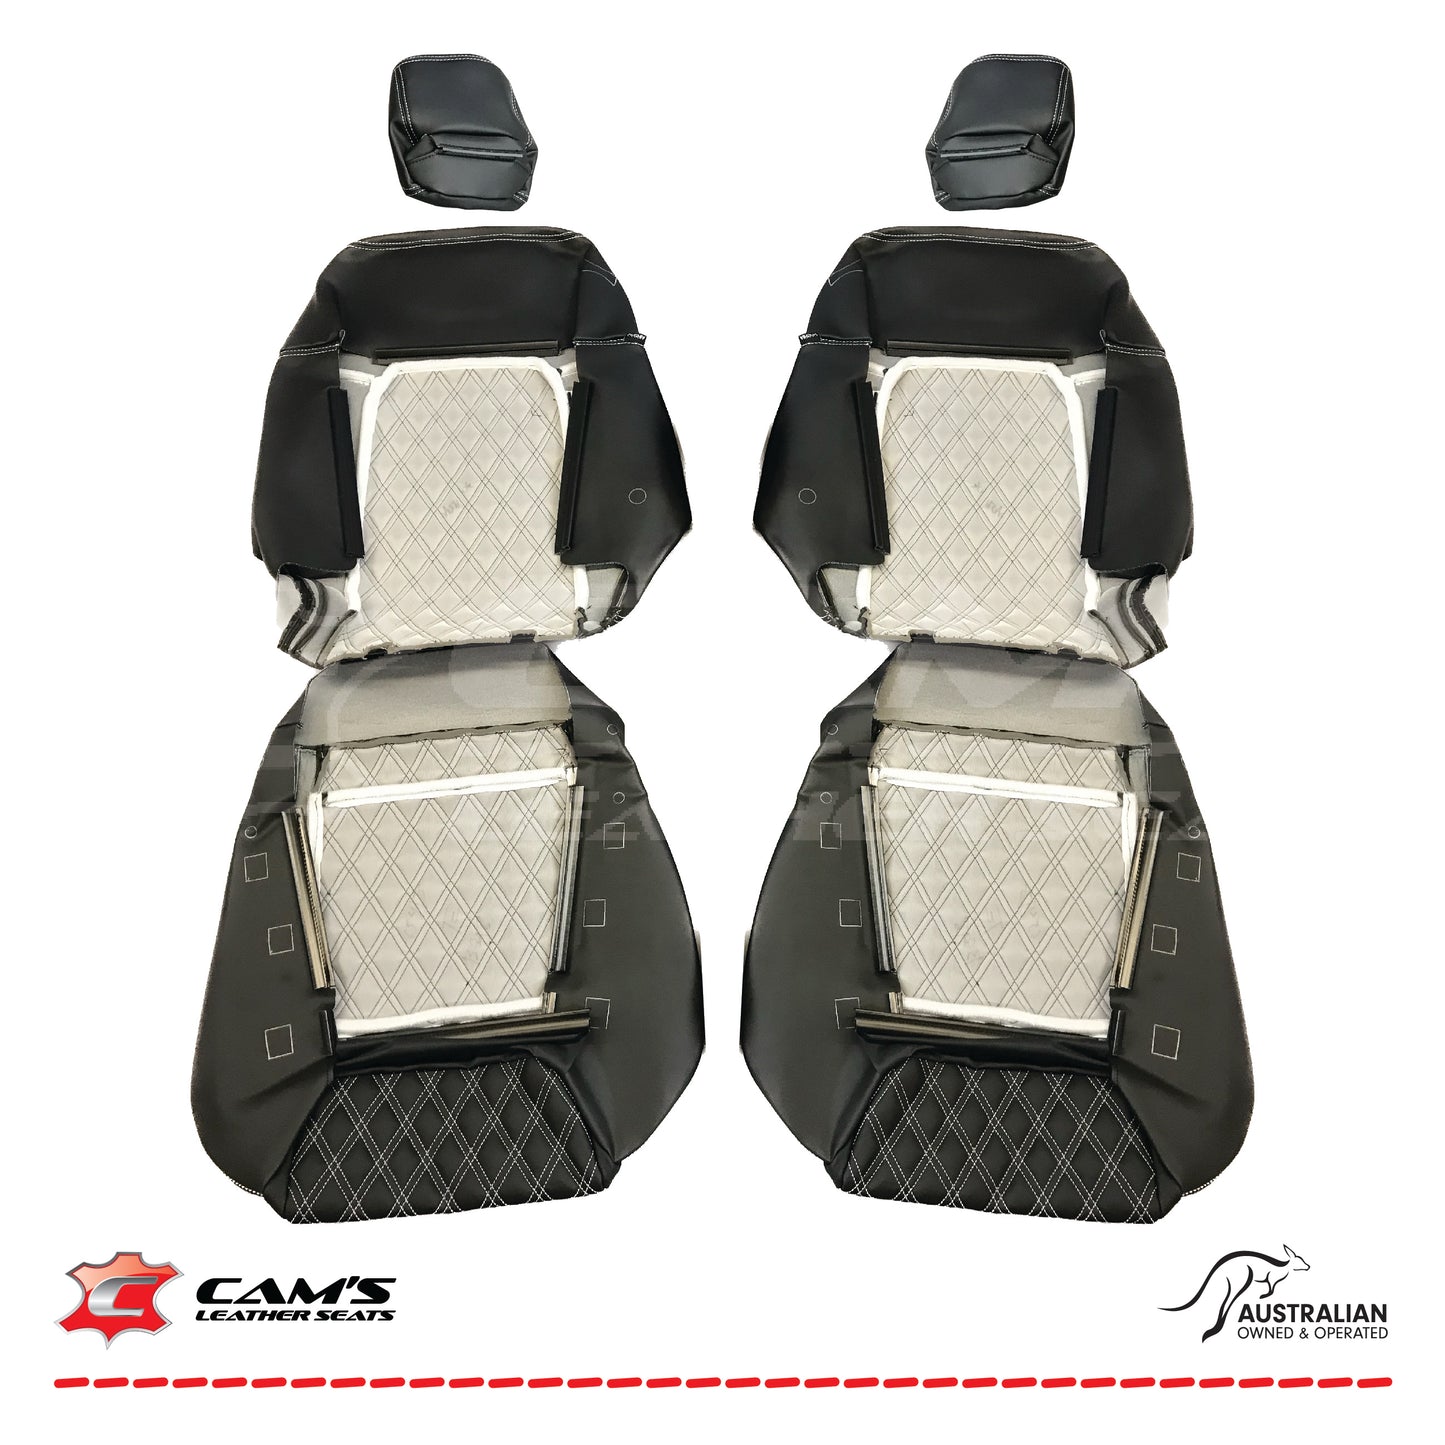 LEATHER SEATS TRIM KIT FOR VE SS SEDAN FRONT & REAR SEATS ONYX & WHITE DIAMOND